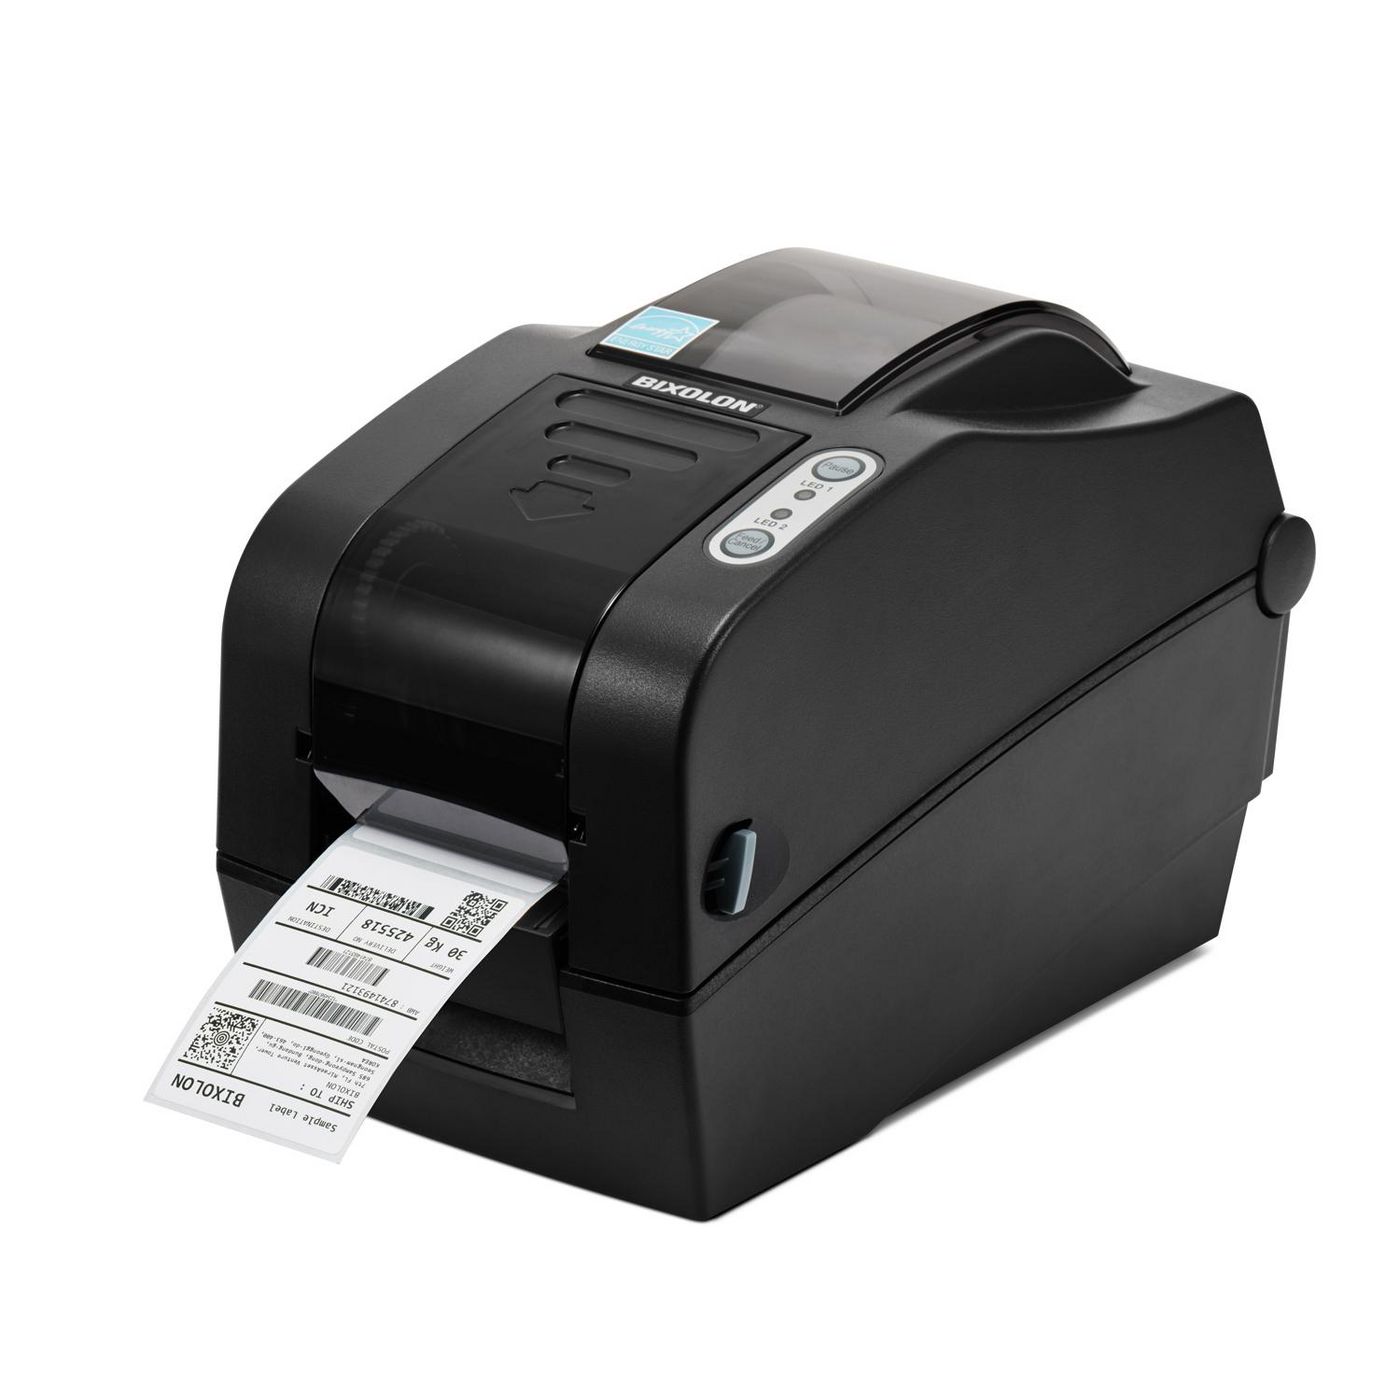 Slp-tx220ceg -  Label Printer - Direct Thermal - USB / Parallel